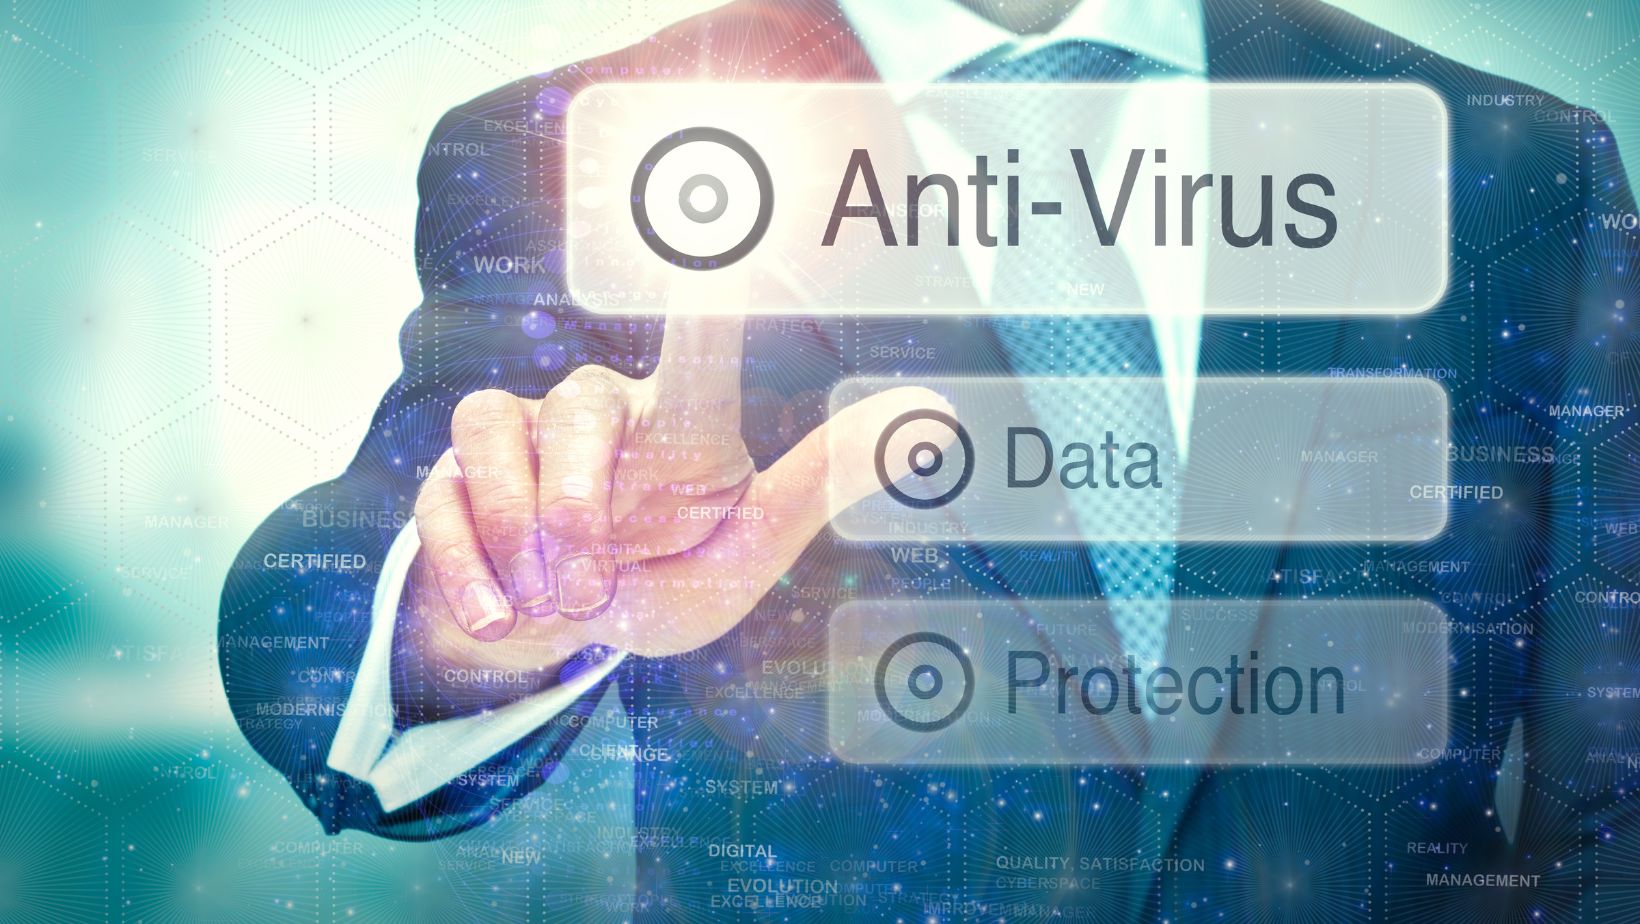 Antivirus security software